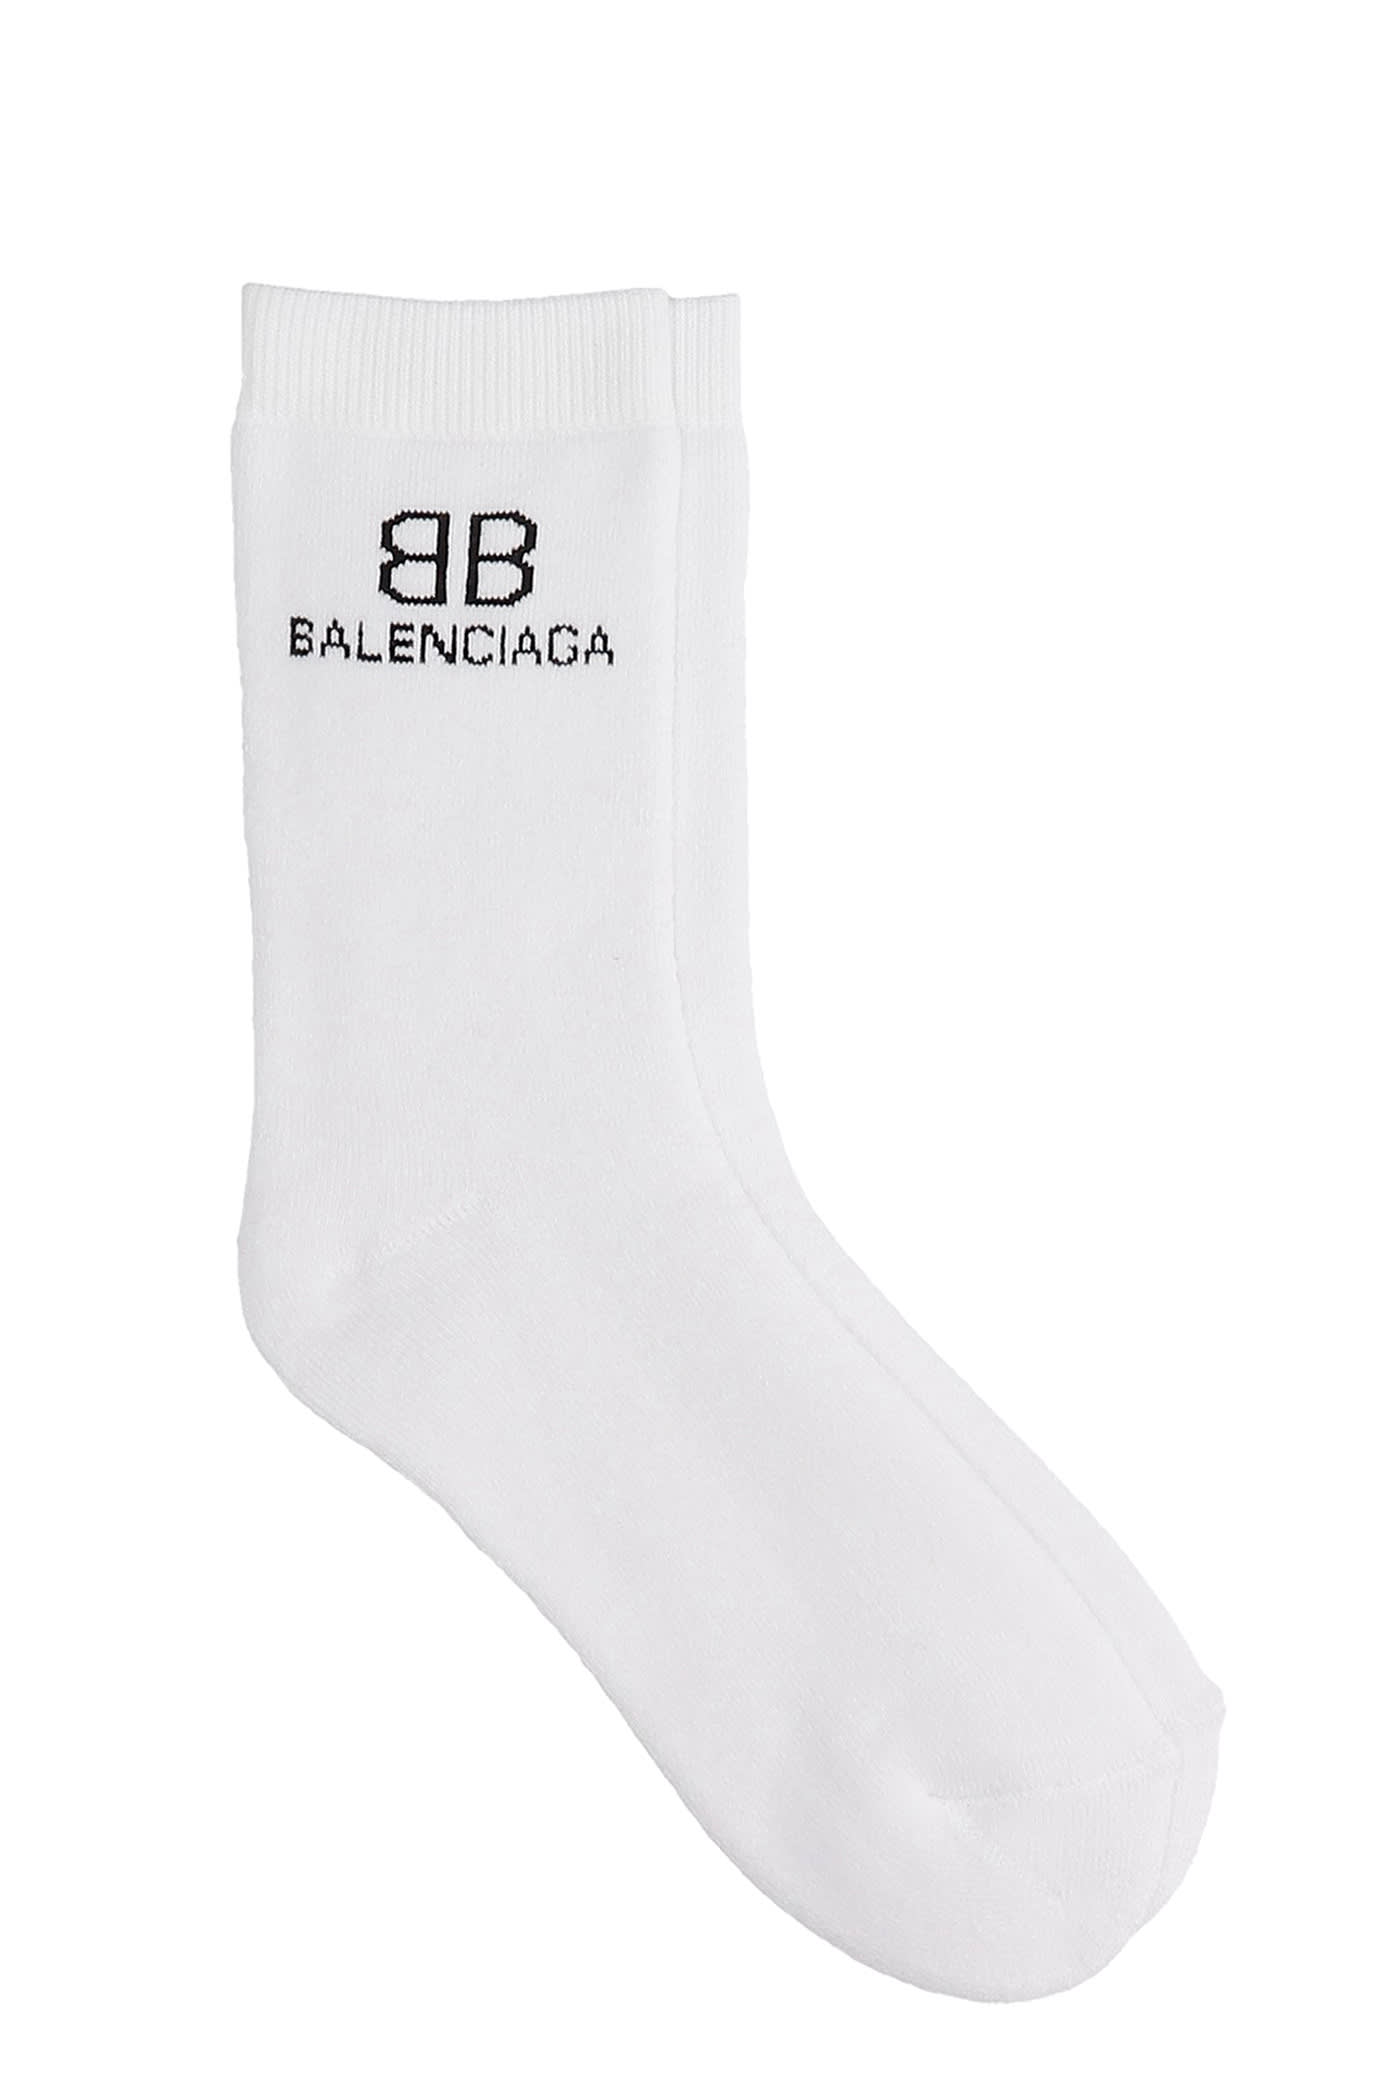 BALENCIAGA SOCKS IN WHITE COTTON,6406094A4B5 9060